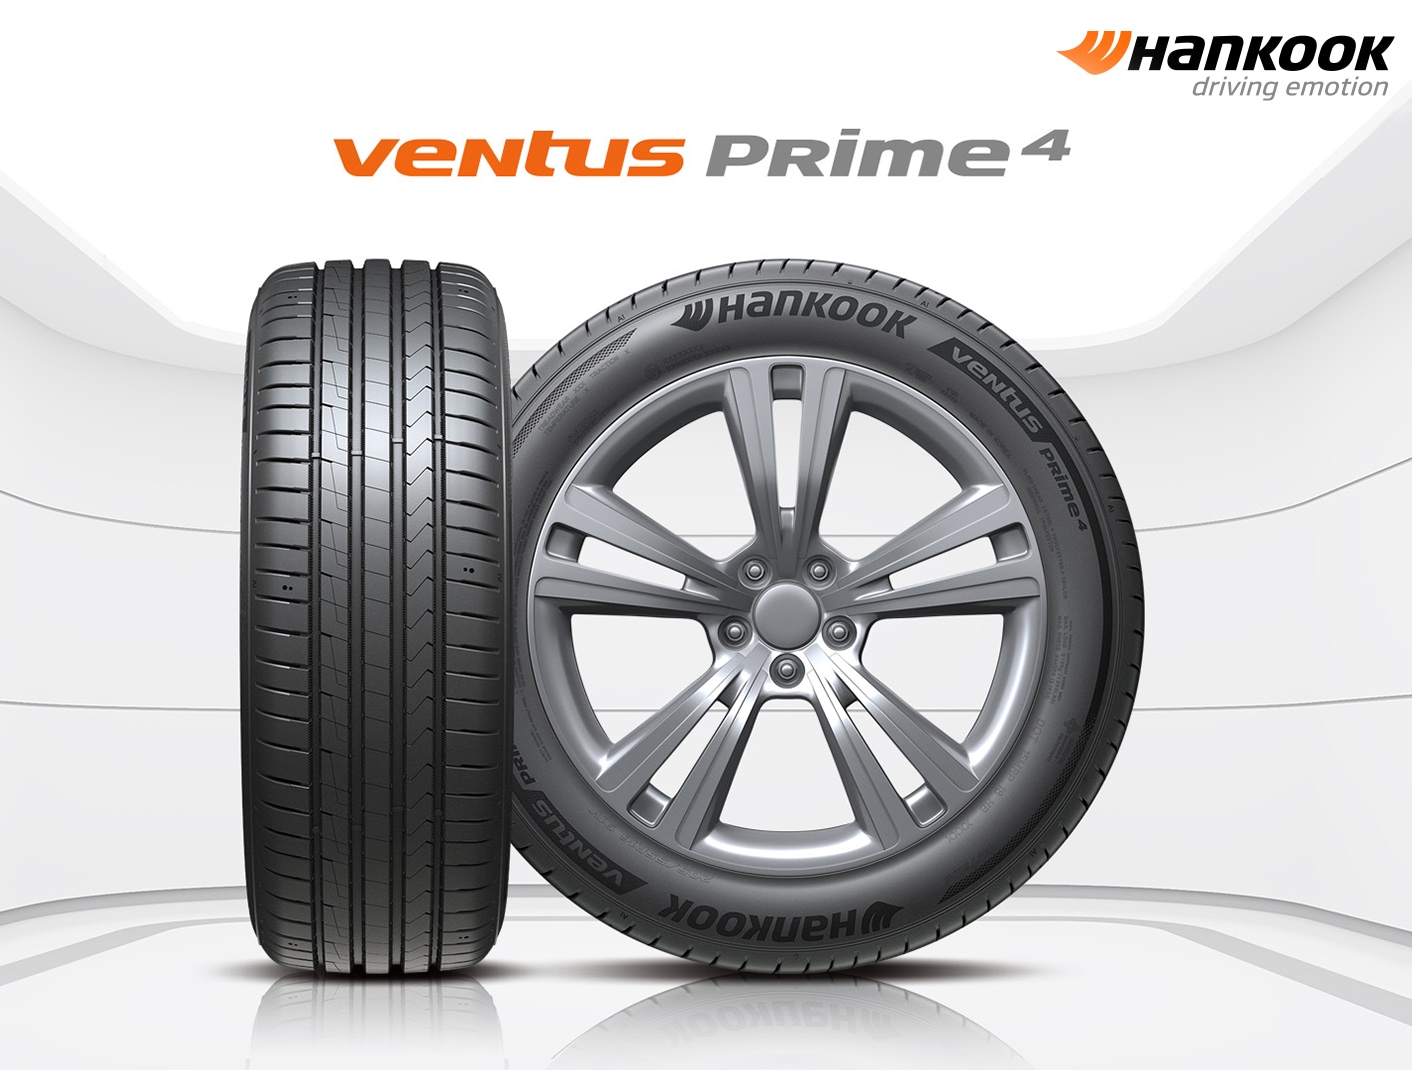 Hankook Tire supplies original equipment tire for Mitsubishi’s compact SUV Xforce